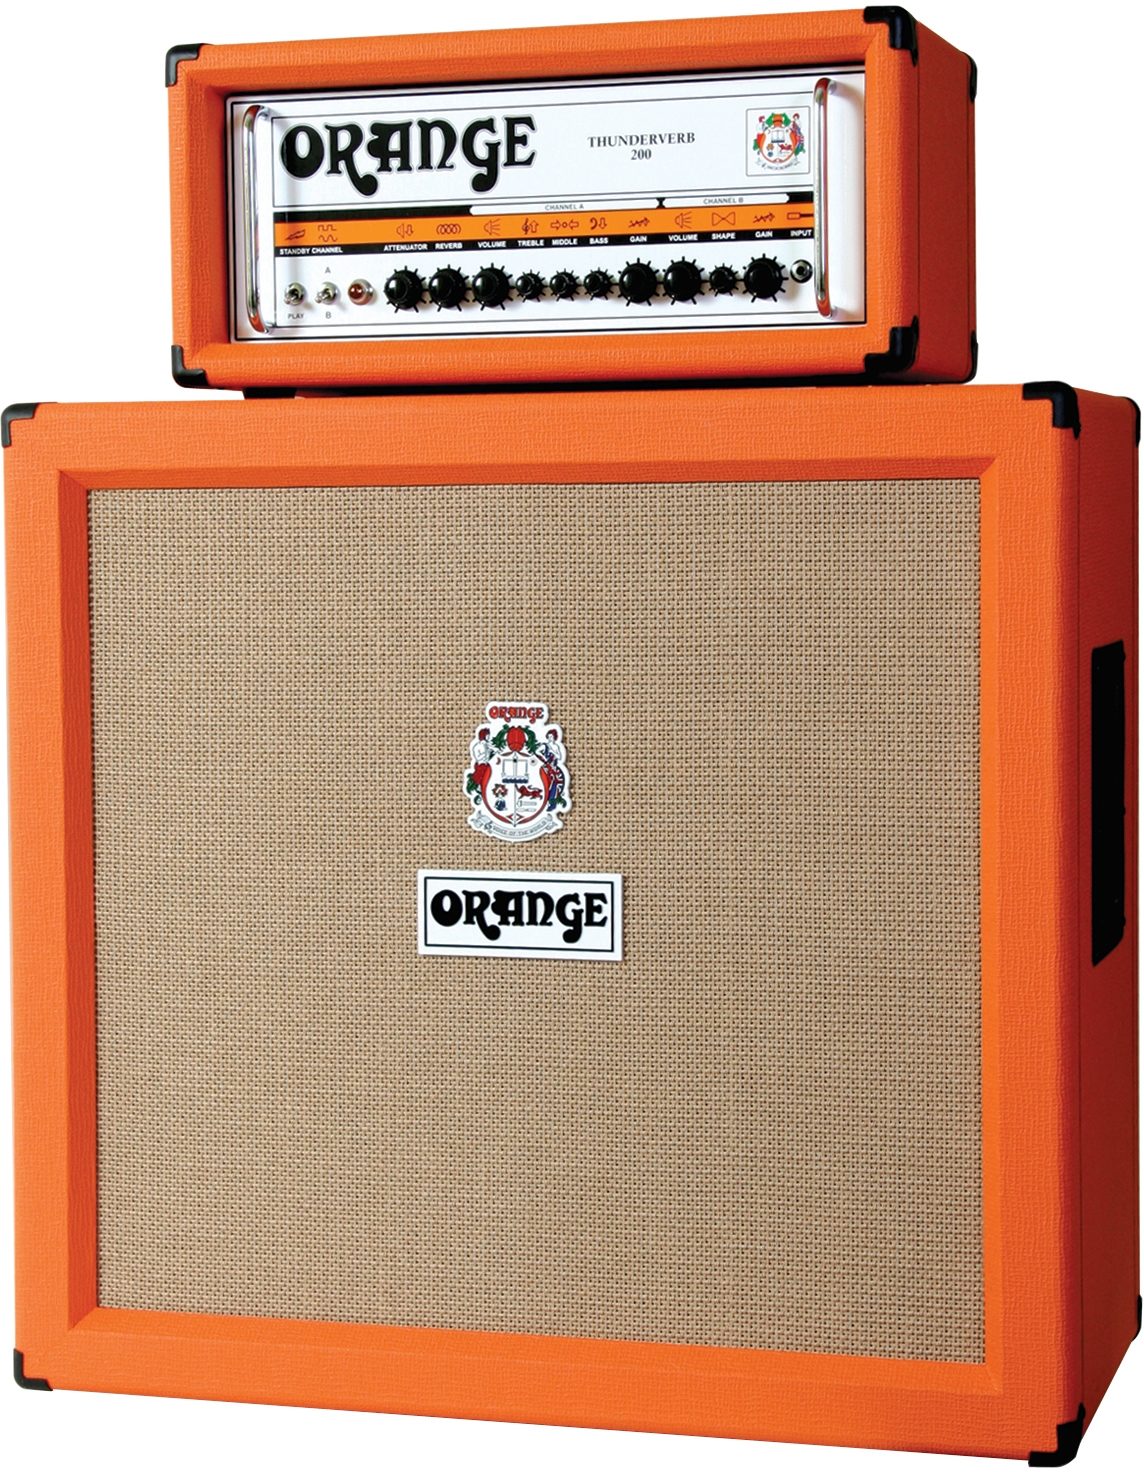 Orange Th200htc Thunderverb Guitar Amplifier Head 200 Watts